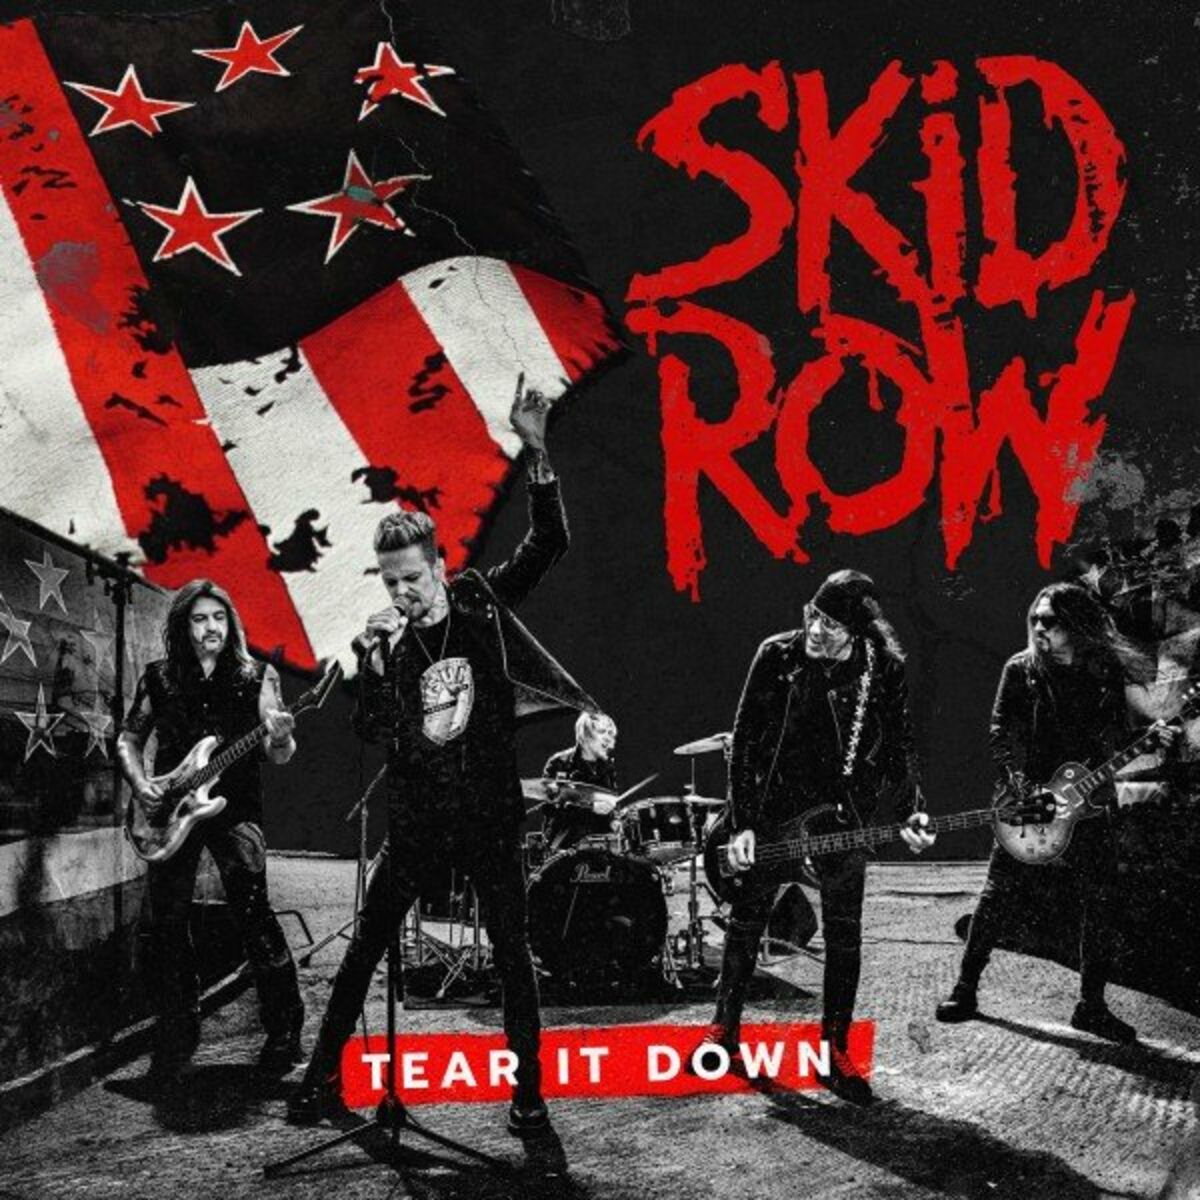 Skid Row: albums, songs, playlists | Listen on Deezer